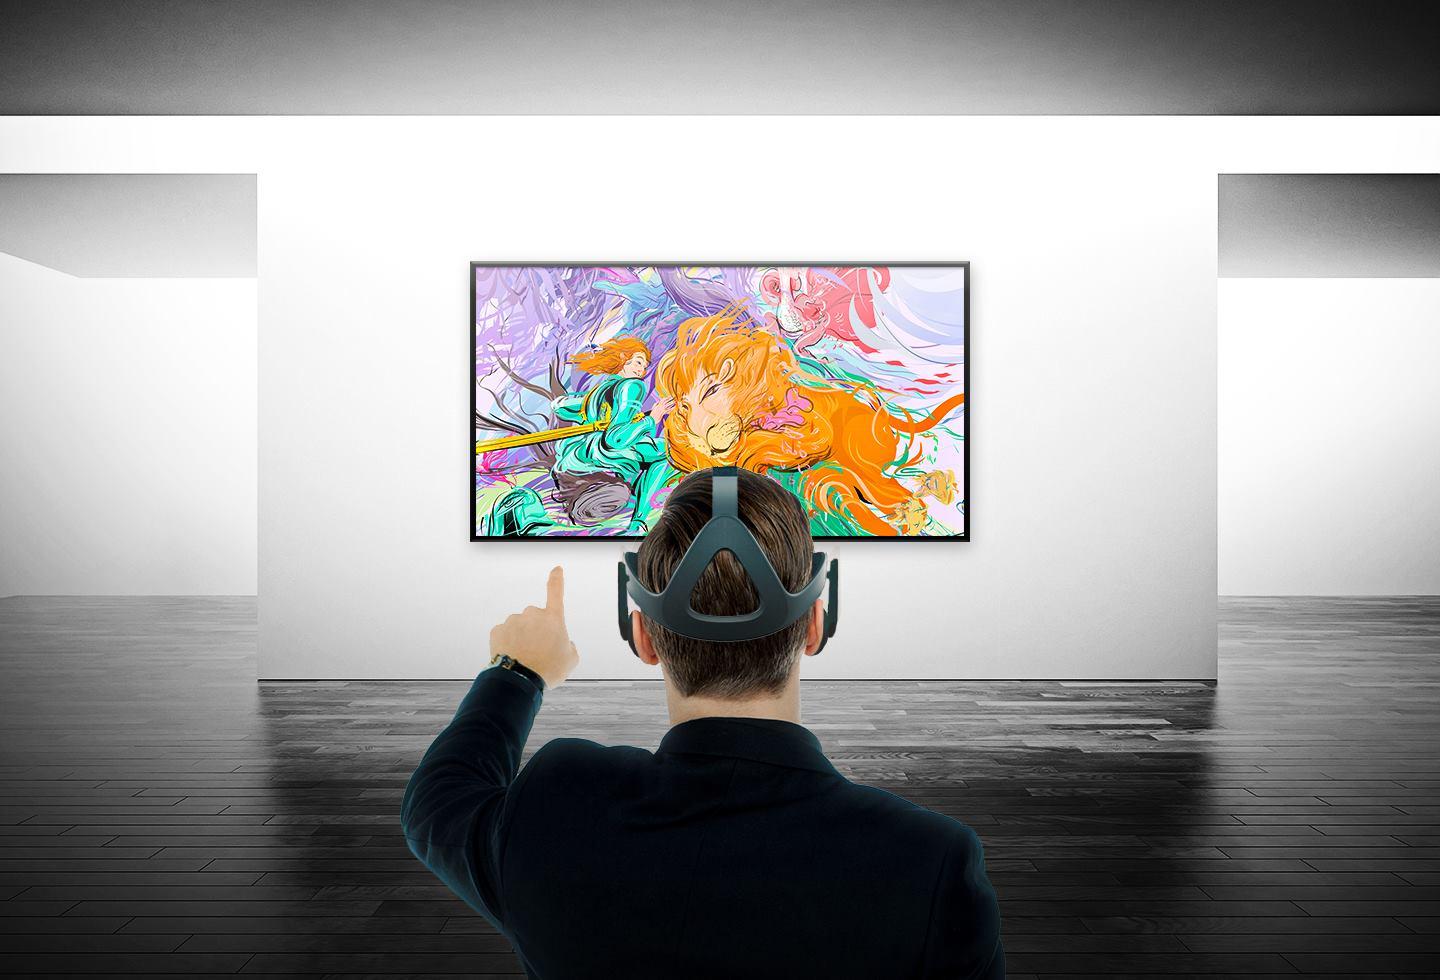 Magik Gallery - An Immersive VR/AR Art Experience